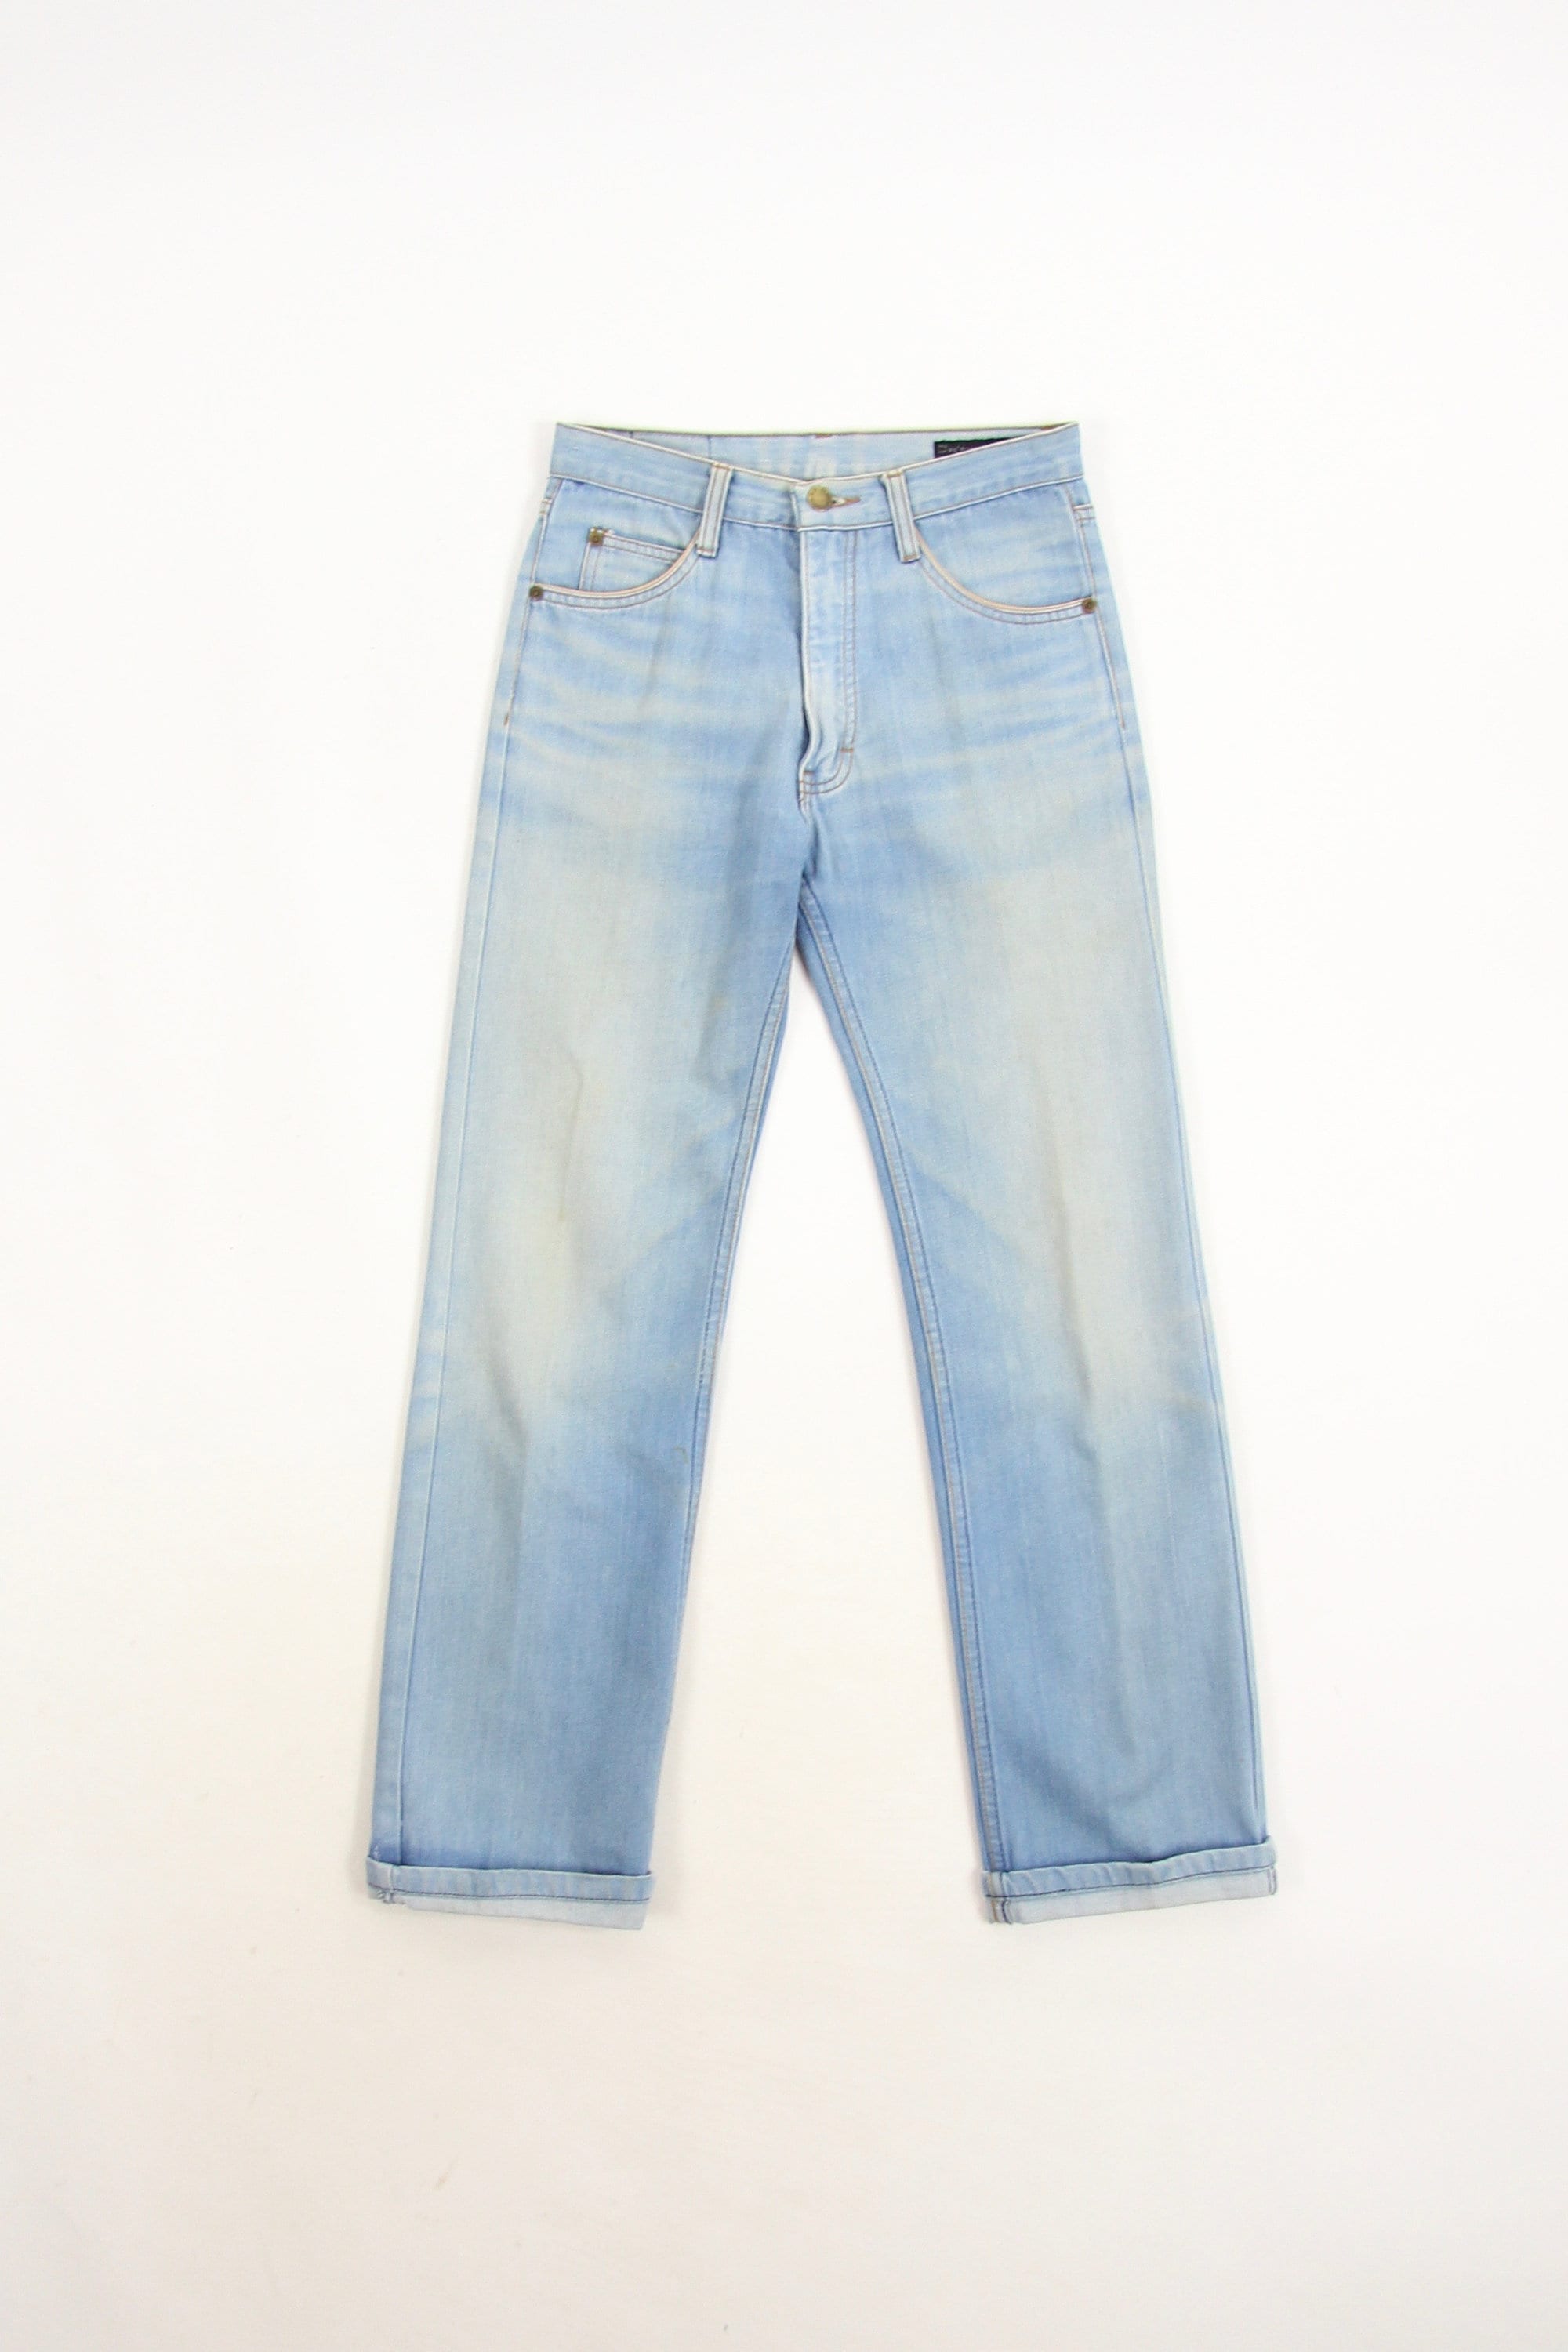 70's Brittana Light Wash Unisex Jeans Vintage Size 28x28